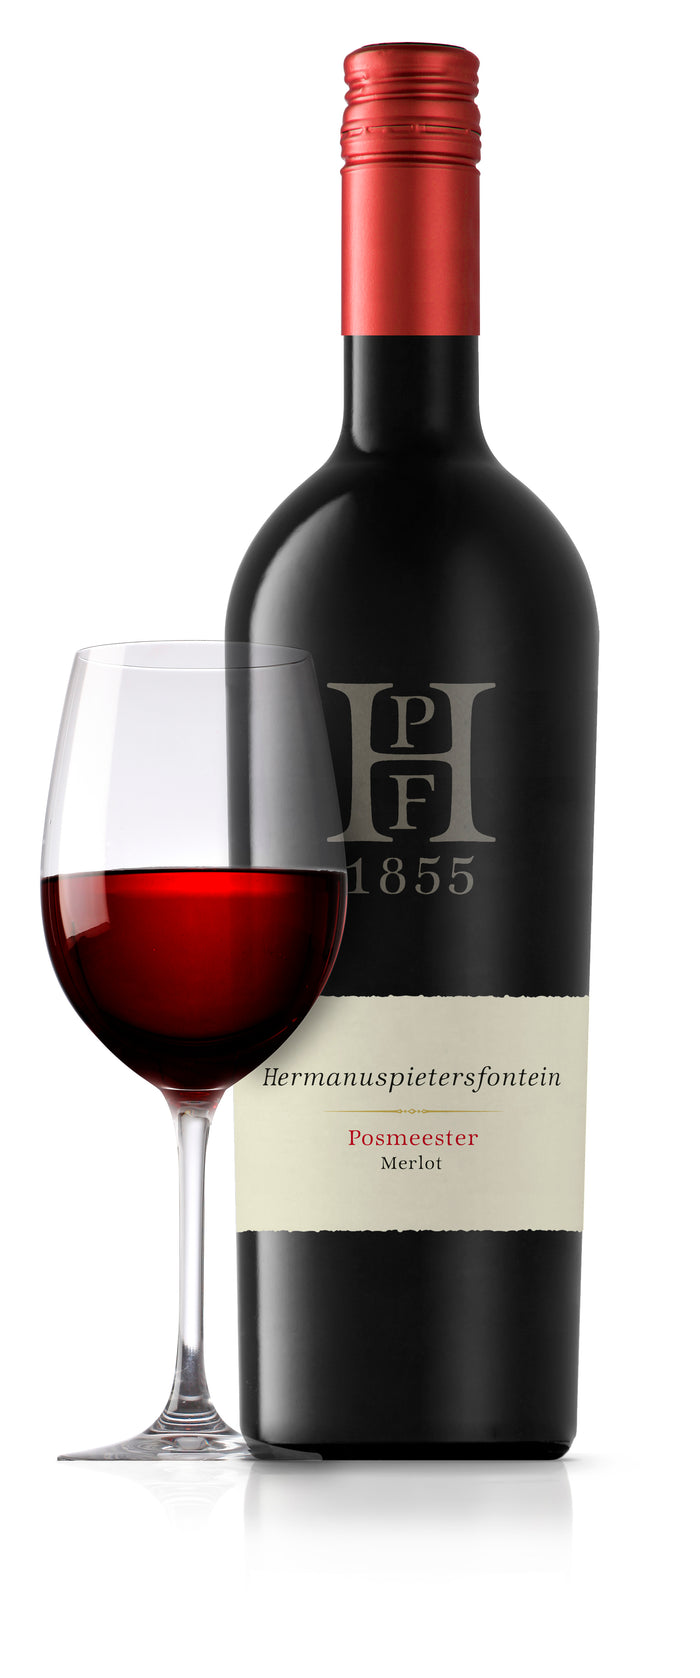 Posmeester (Merlot) - Hermanuspietersfontein Wines 